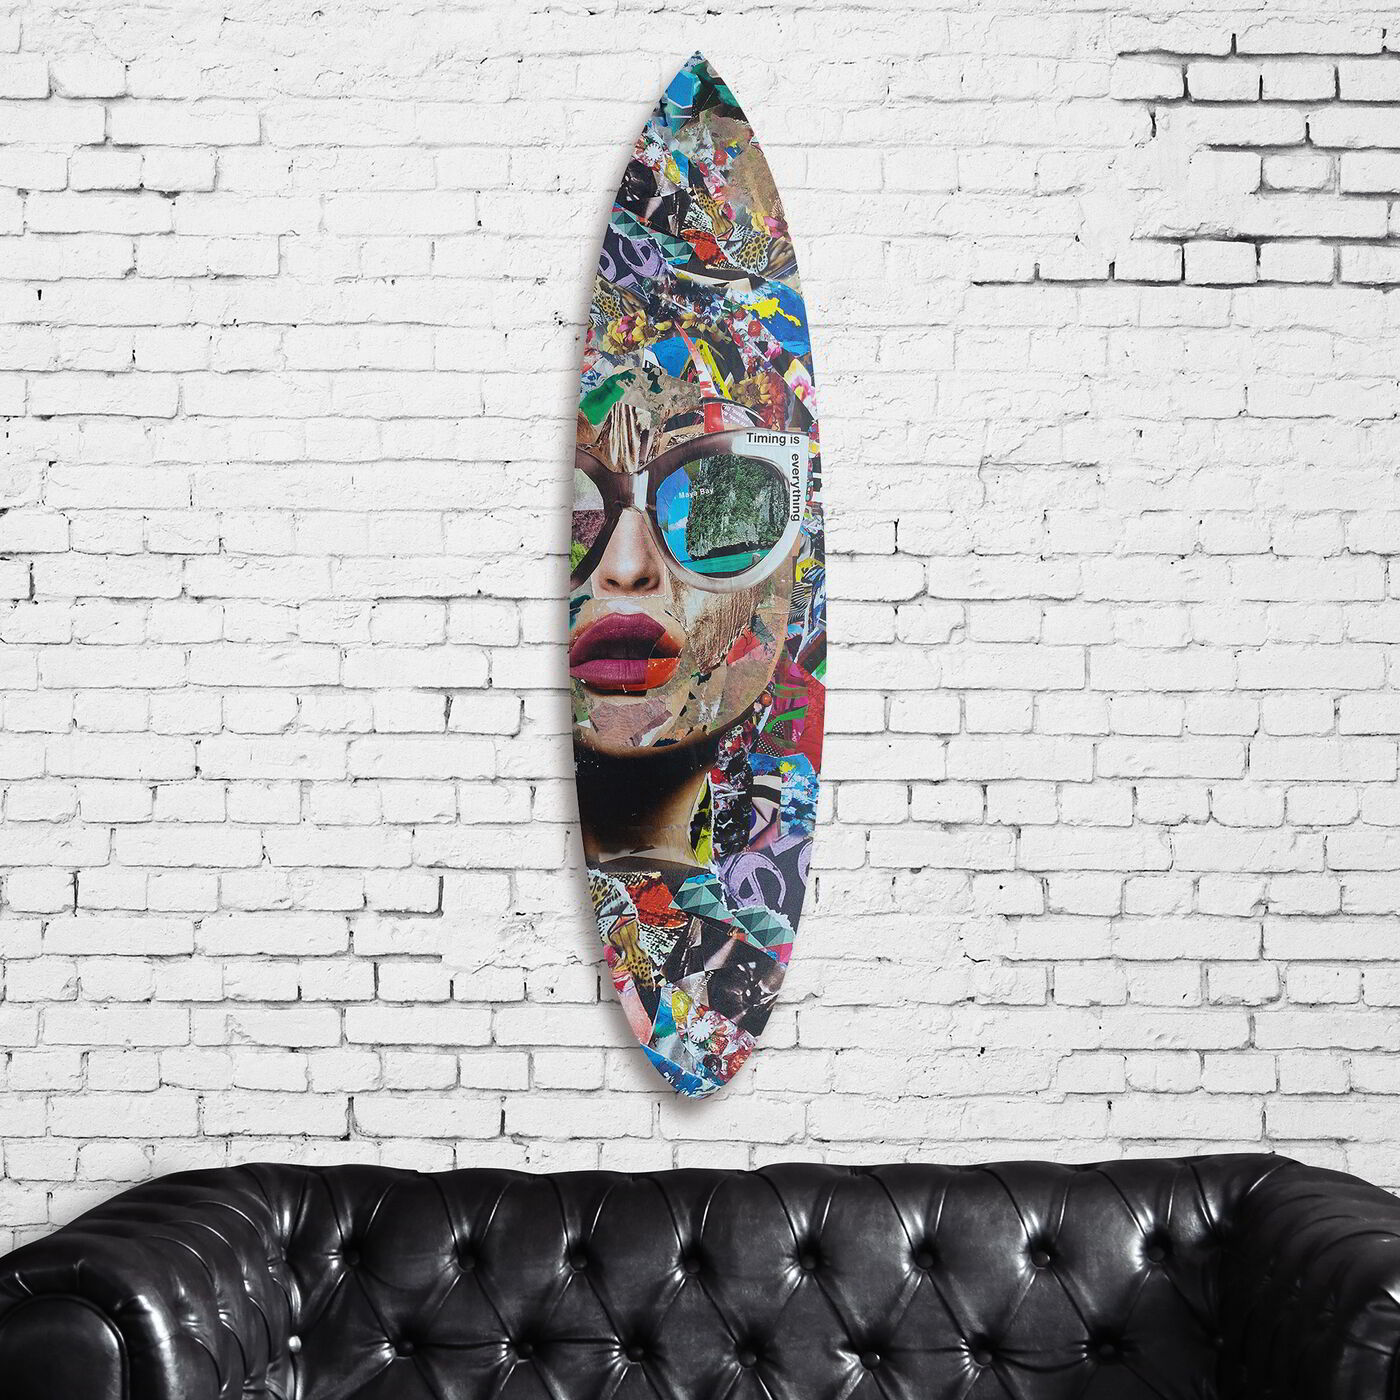 Oliver Gal Graffiti Galaxy Surfboard by Katy Hirschfeld - Decorative Surfboard  Wall Art Print on Acrylic